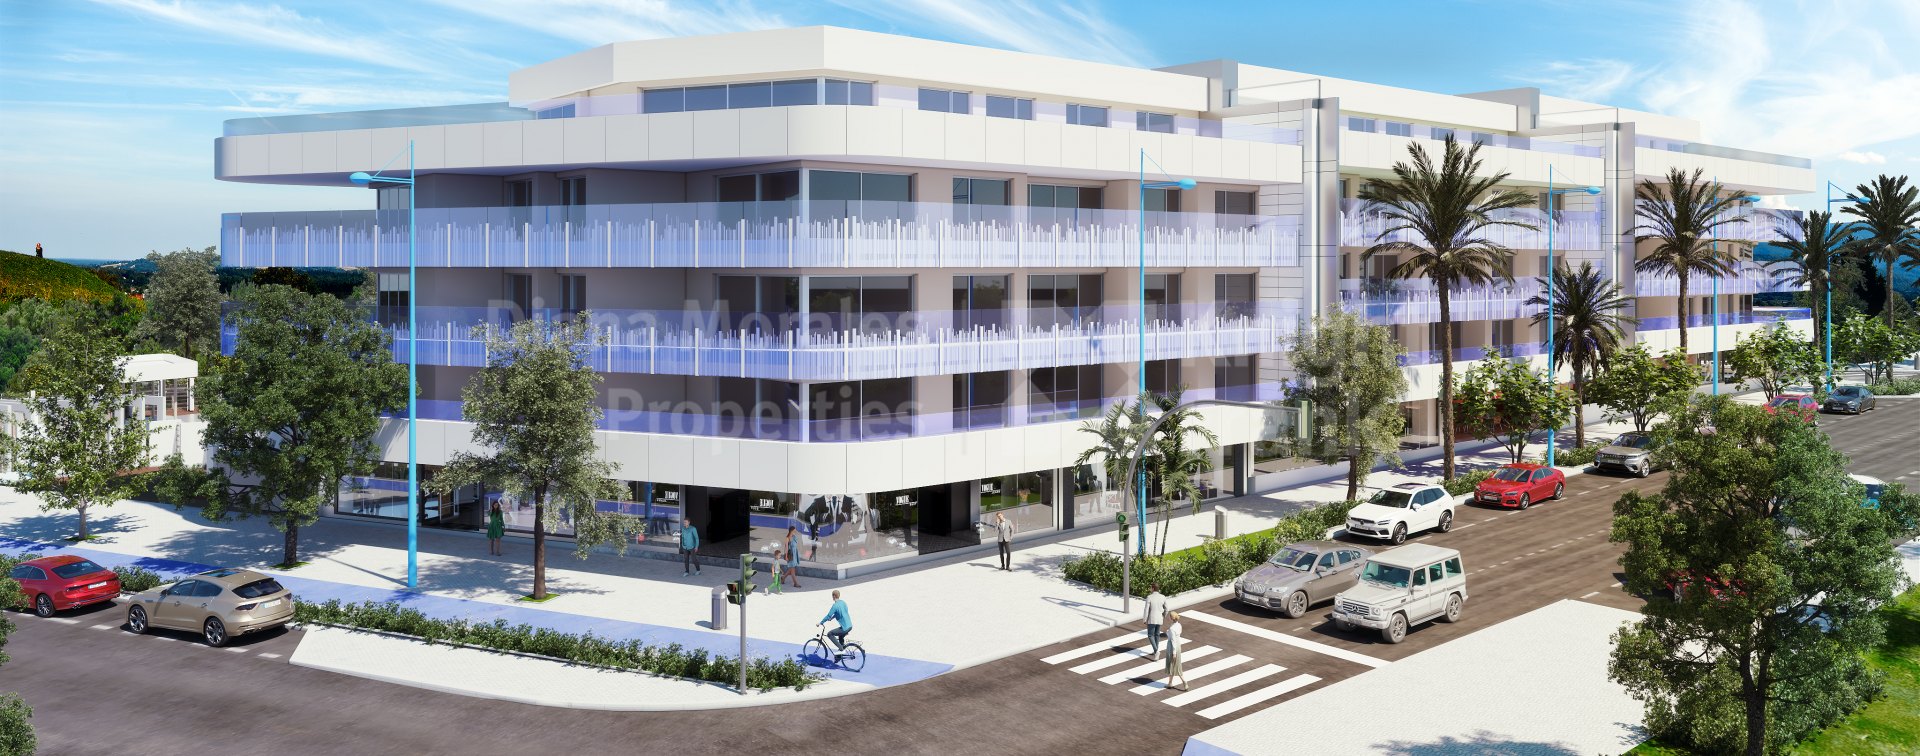 San Pedro Playa, Terra, ein neuer Apartmentkomplex in Strandnähe